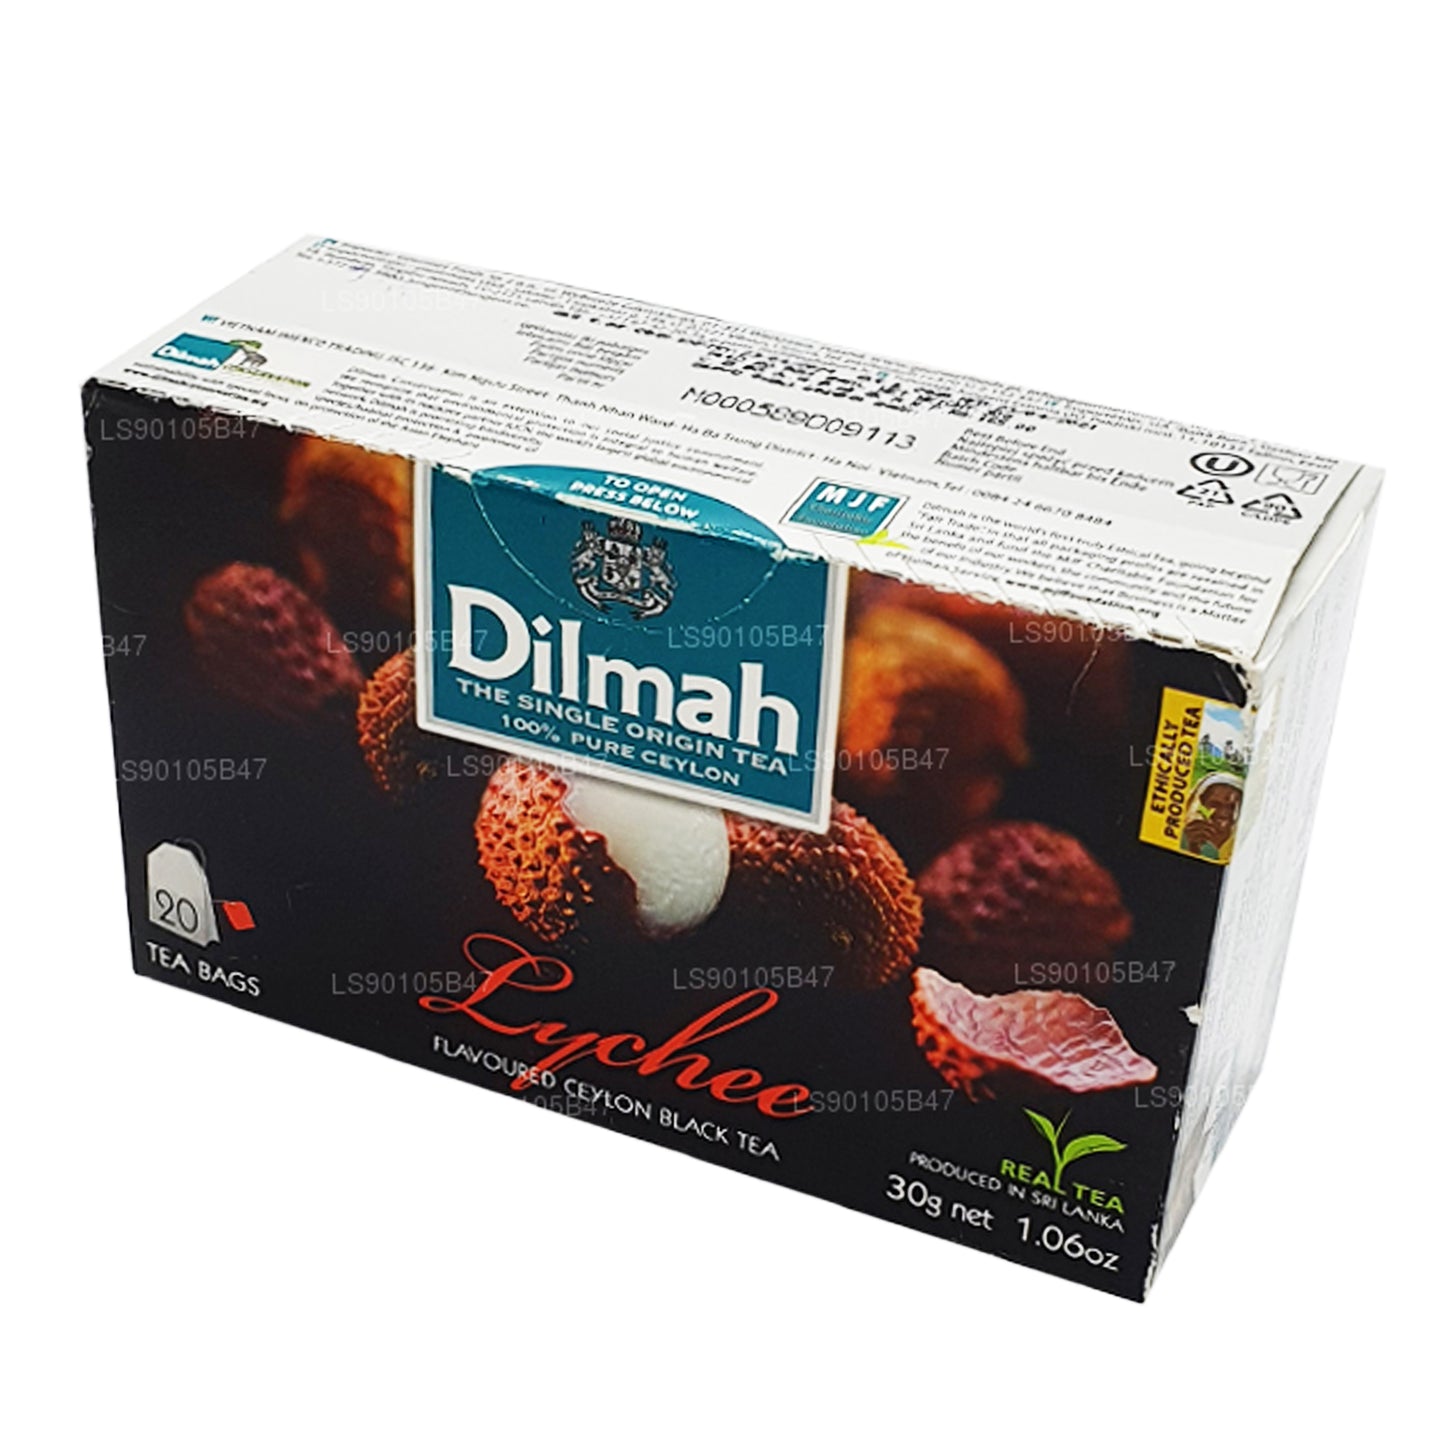 Dilmah Lychee Herbata czarna o smaku (30g)